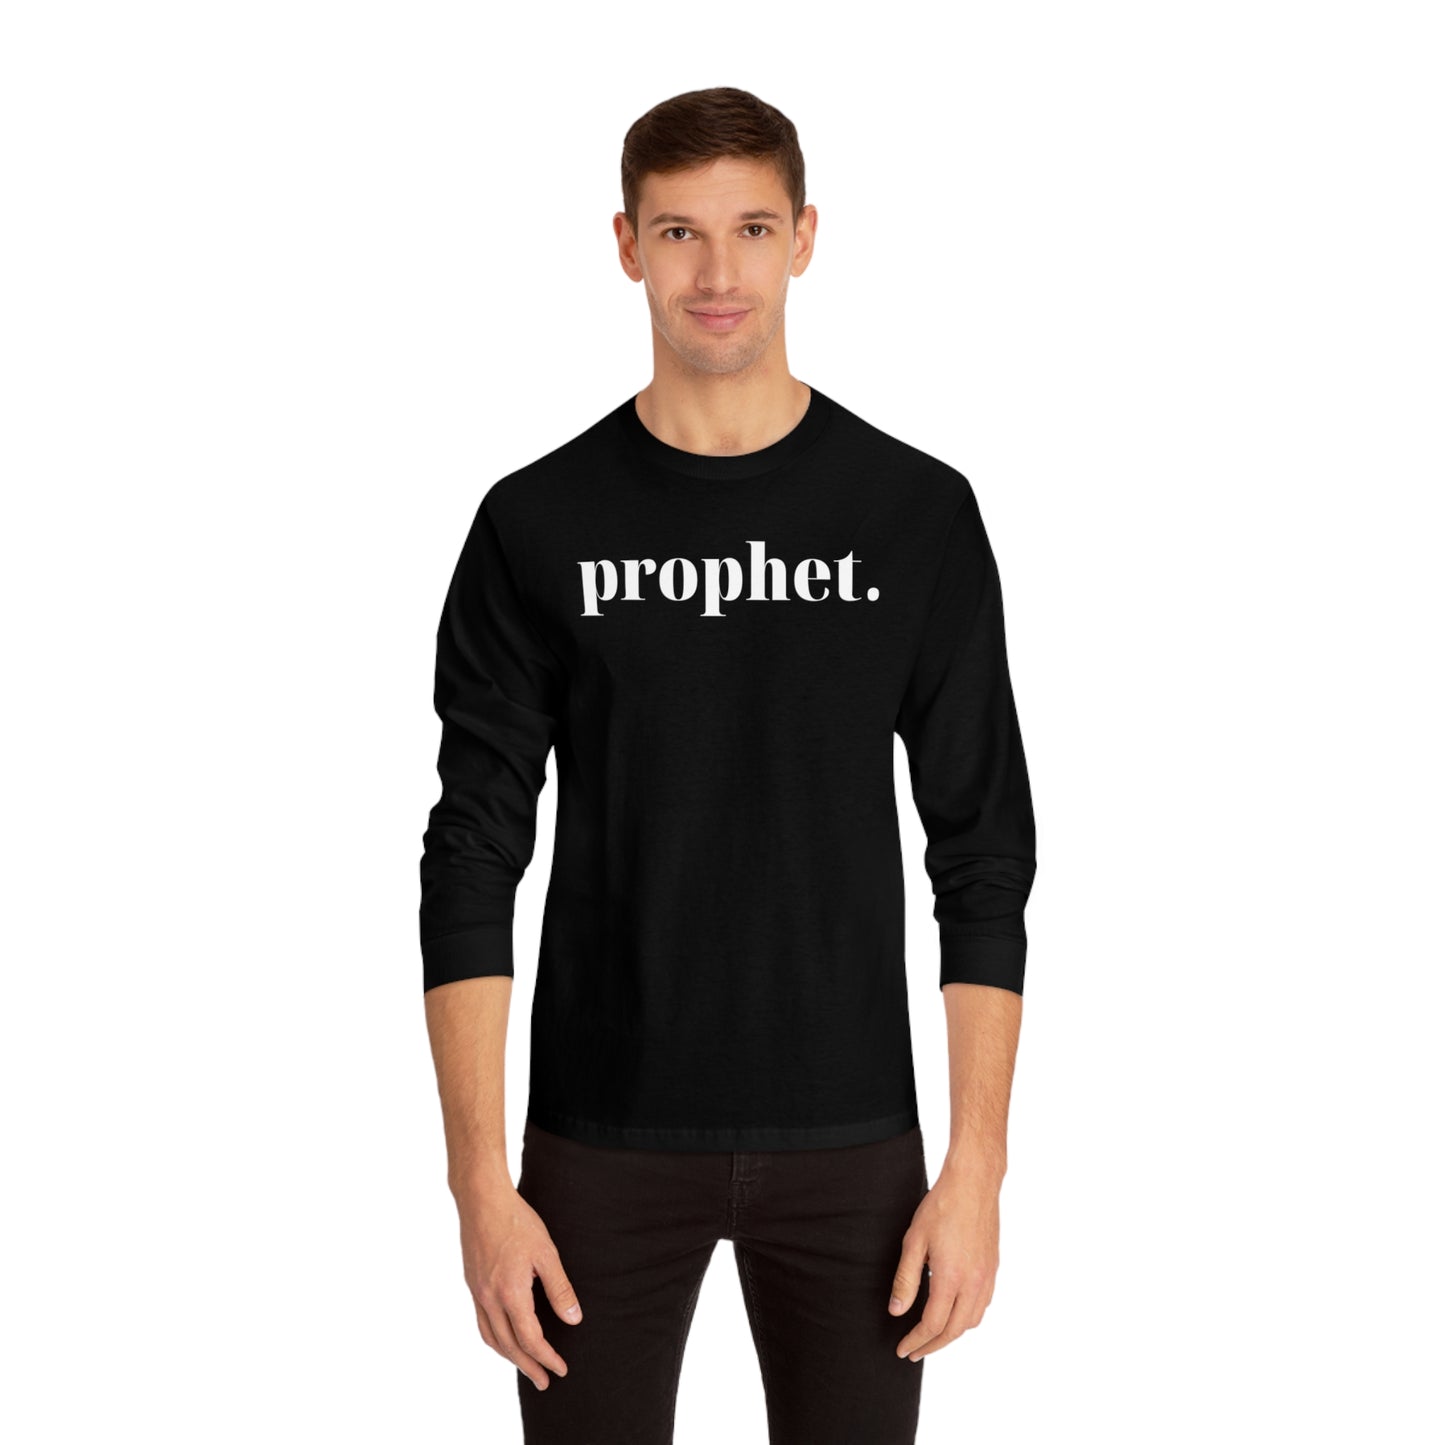 "Prophet" Unisex Classic Long Sleeve T-Shirt